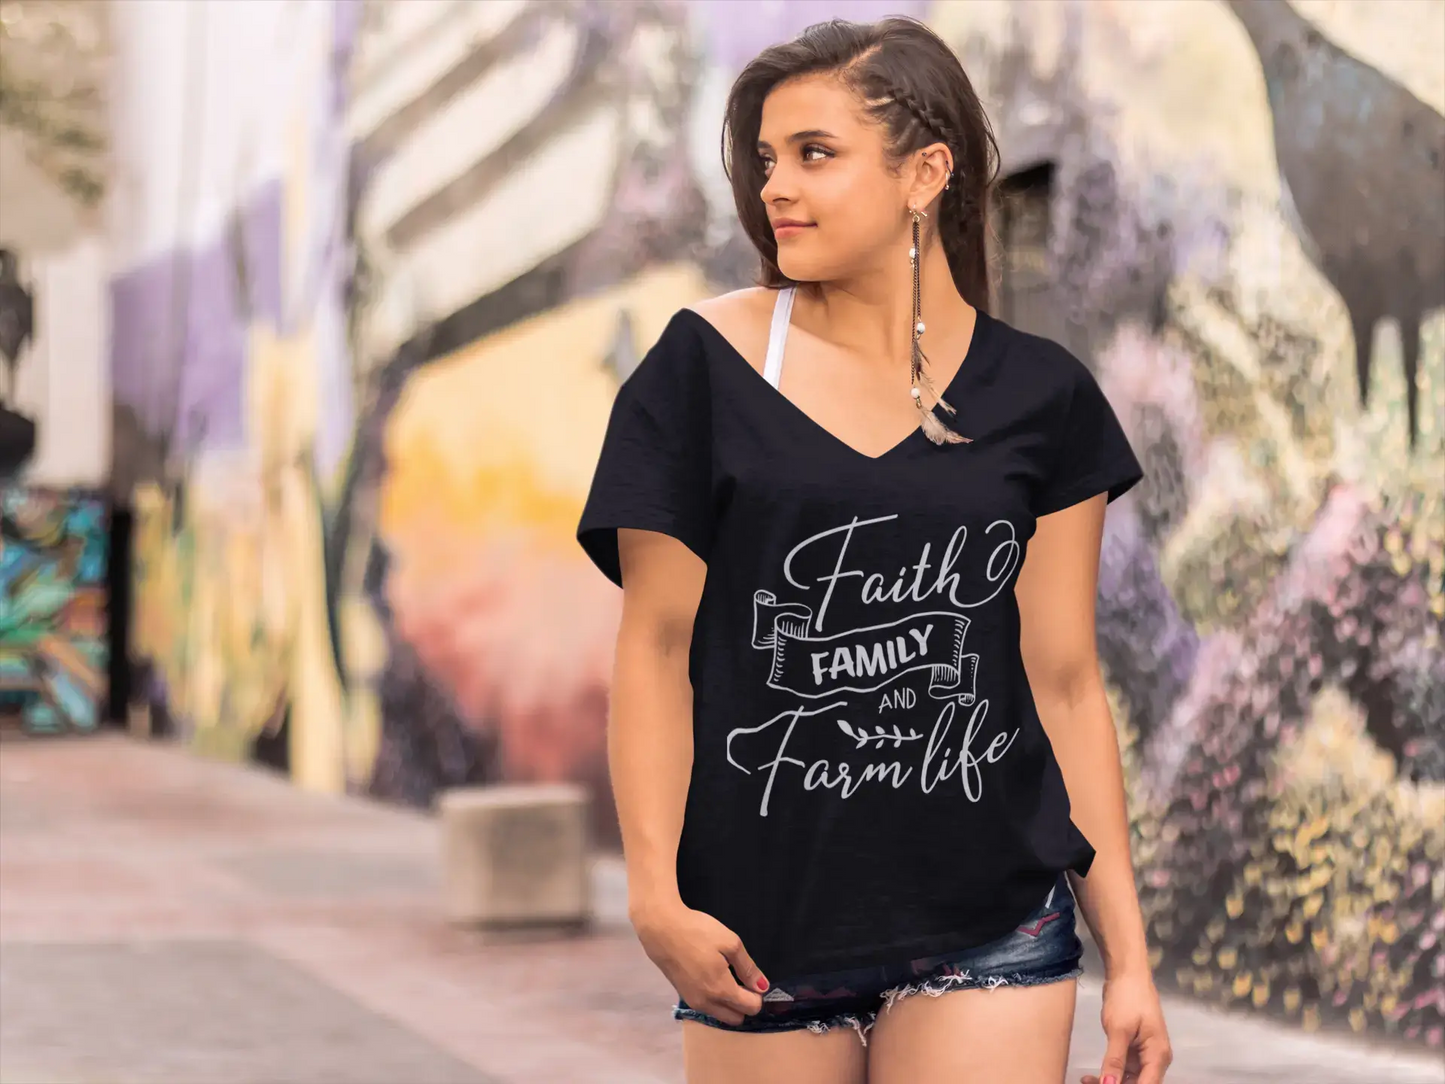 ULTRABASIC Women's T-Shirt Faith Family And Farm Life - Short Sleeve Tee Shirt Tops